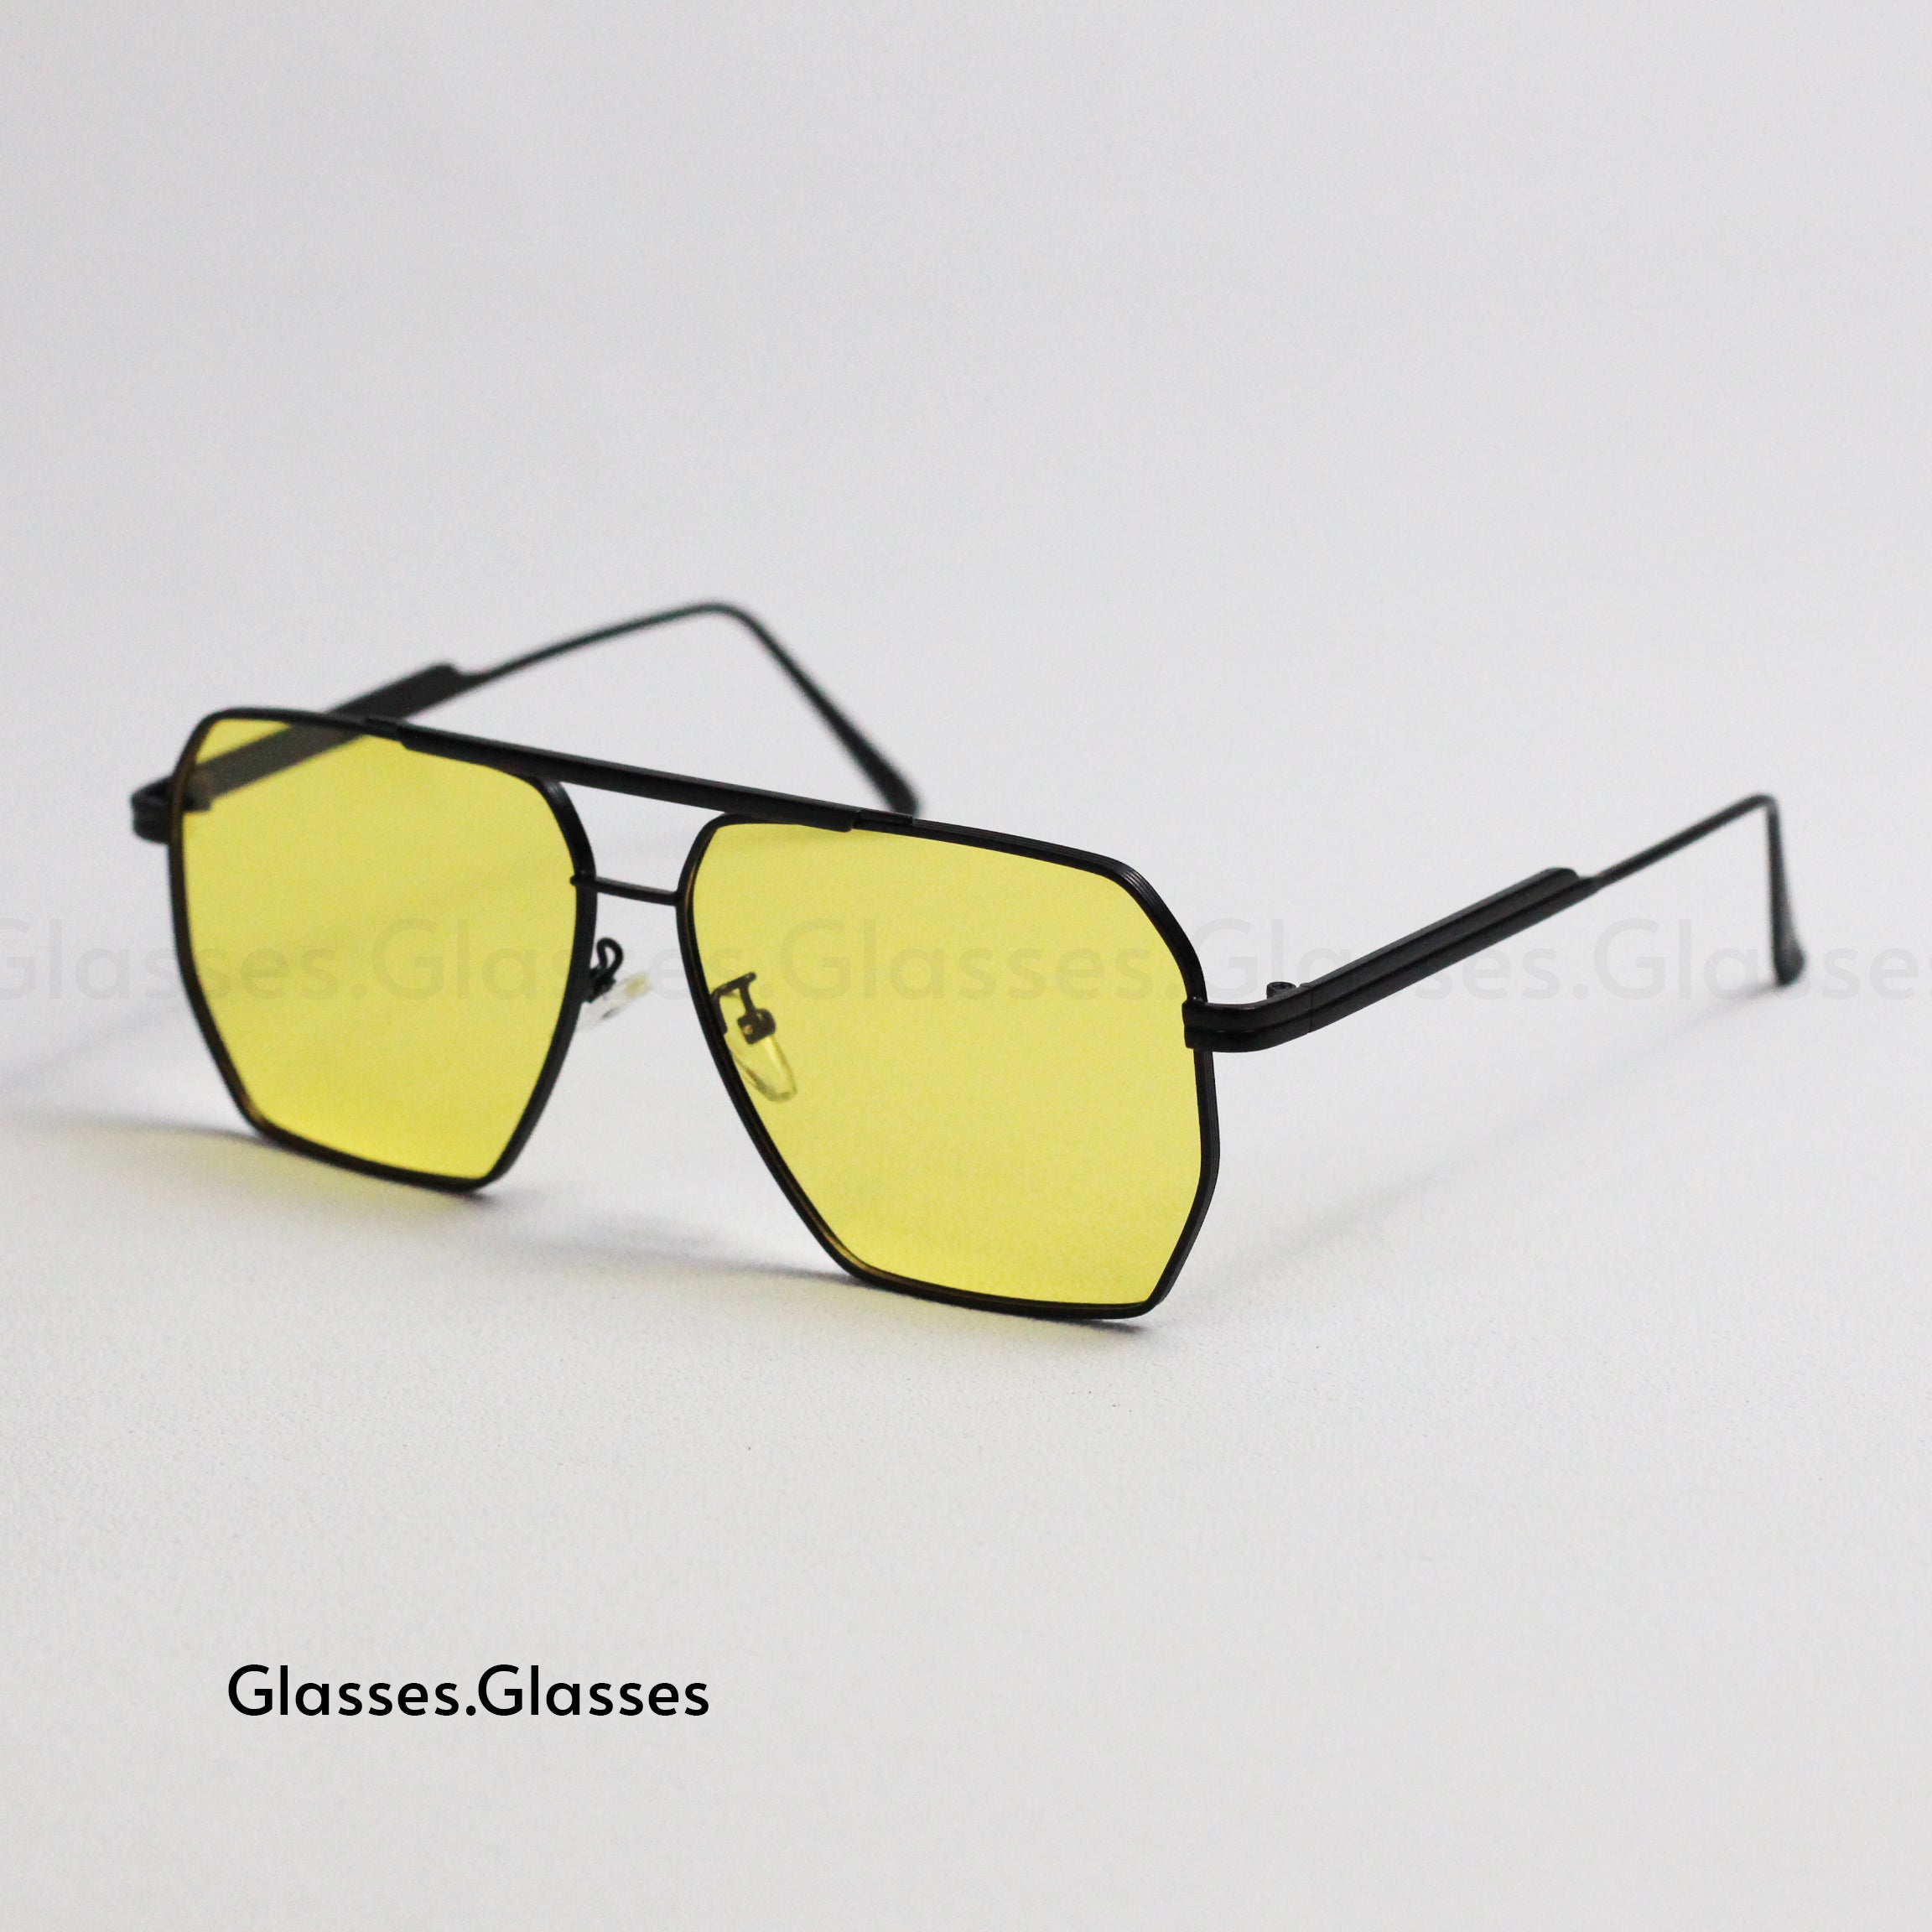 Life Rock - Alloy Frame Square Glasses